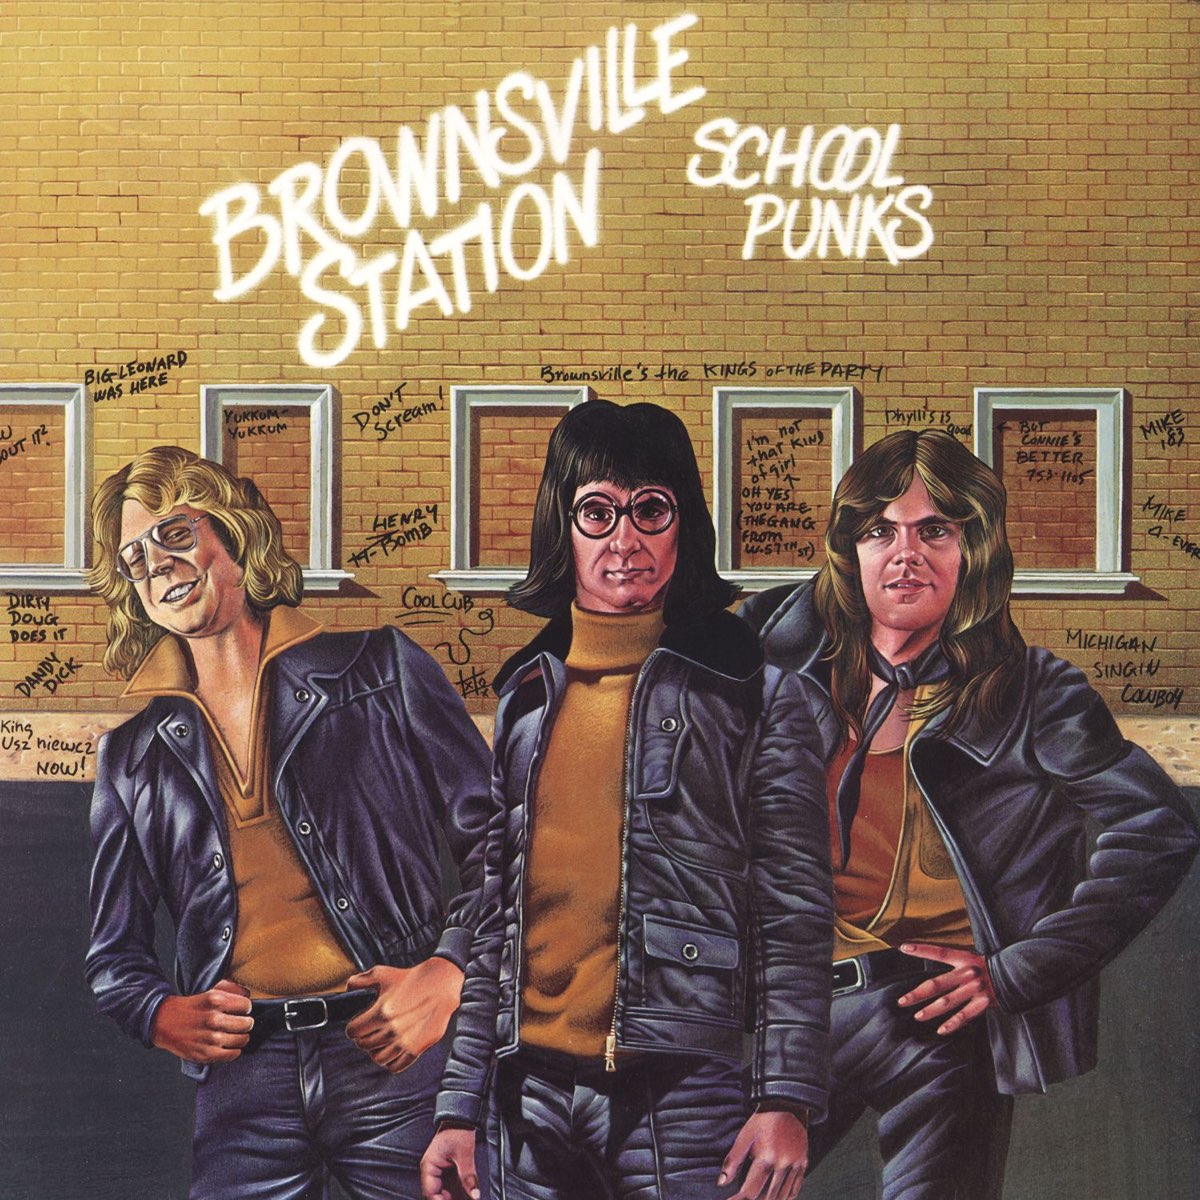 School Punks - Album by Brownsville Station - Apple Music